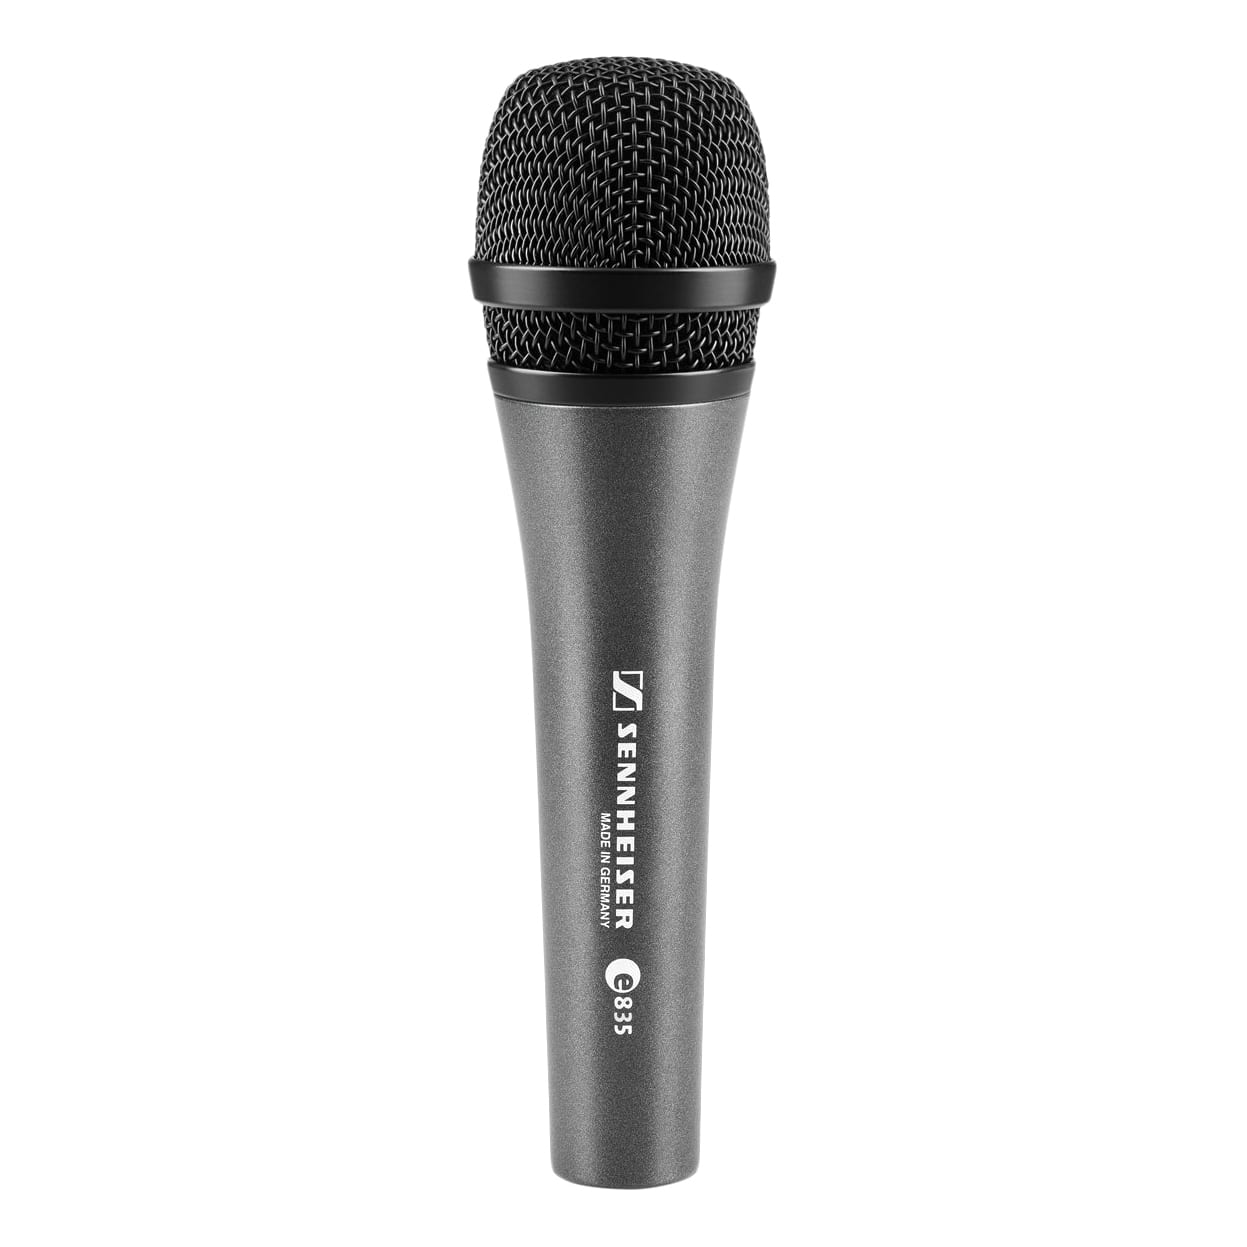 Ручные микрофоны Sennheiser E835 микрофоны для тв и радио sennheiser mke 440